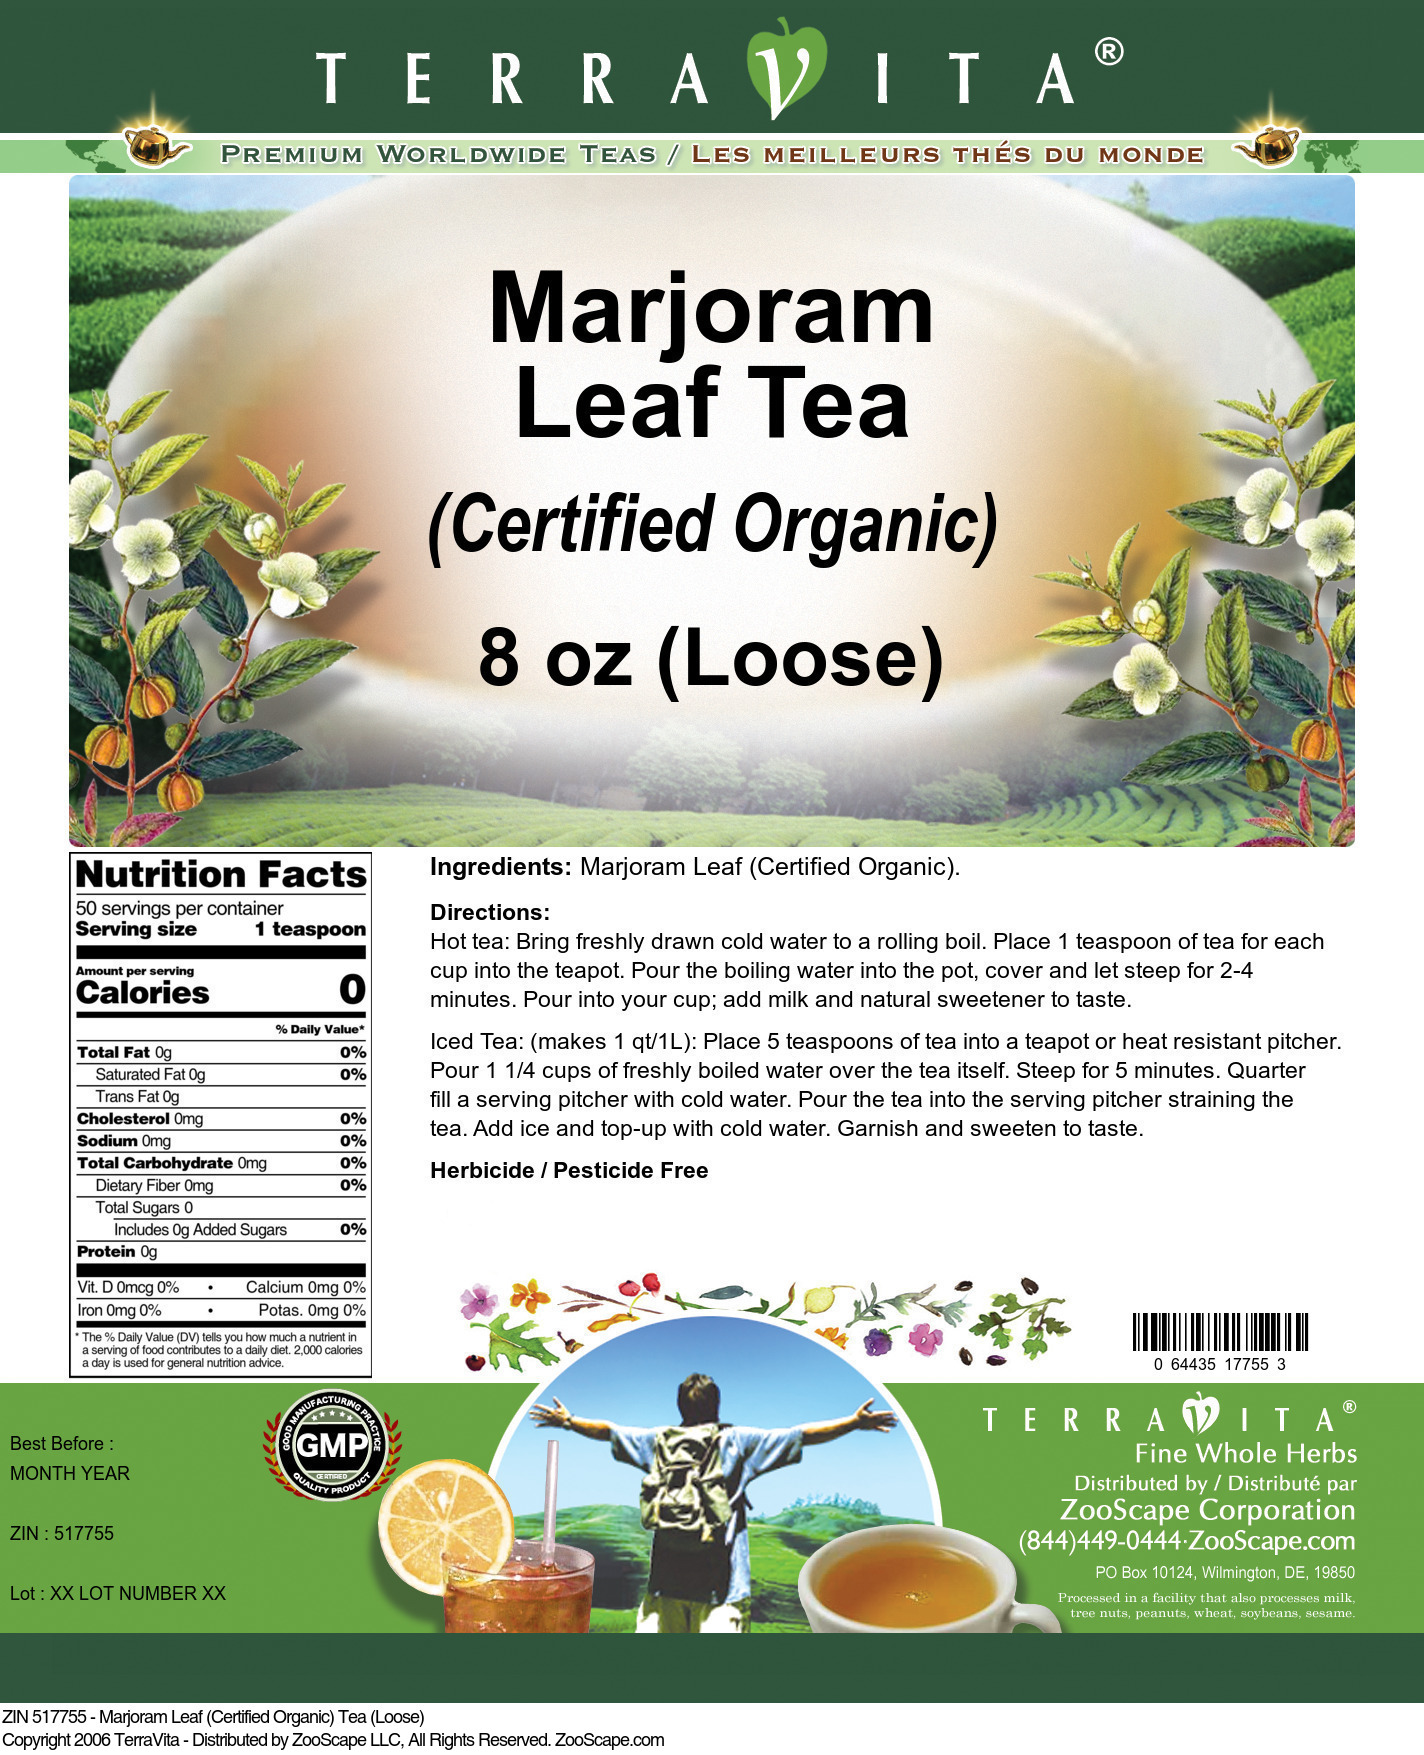 Marjoram Leaf (Certified Organic) Tea (Loose) - Label